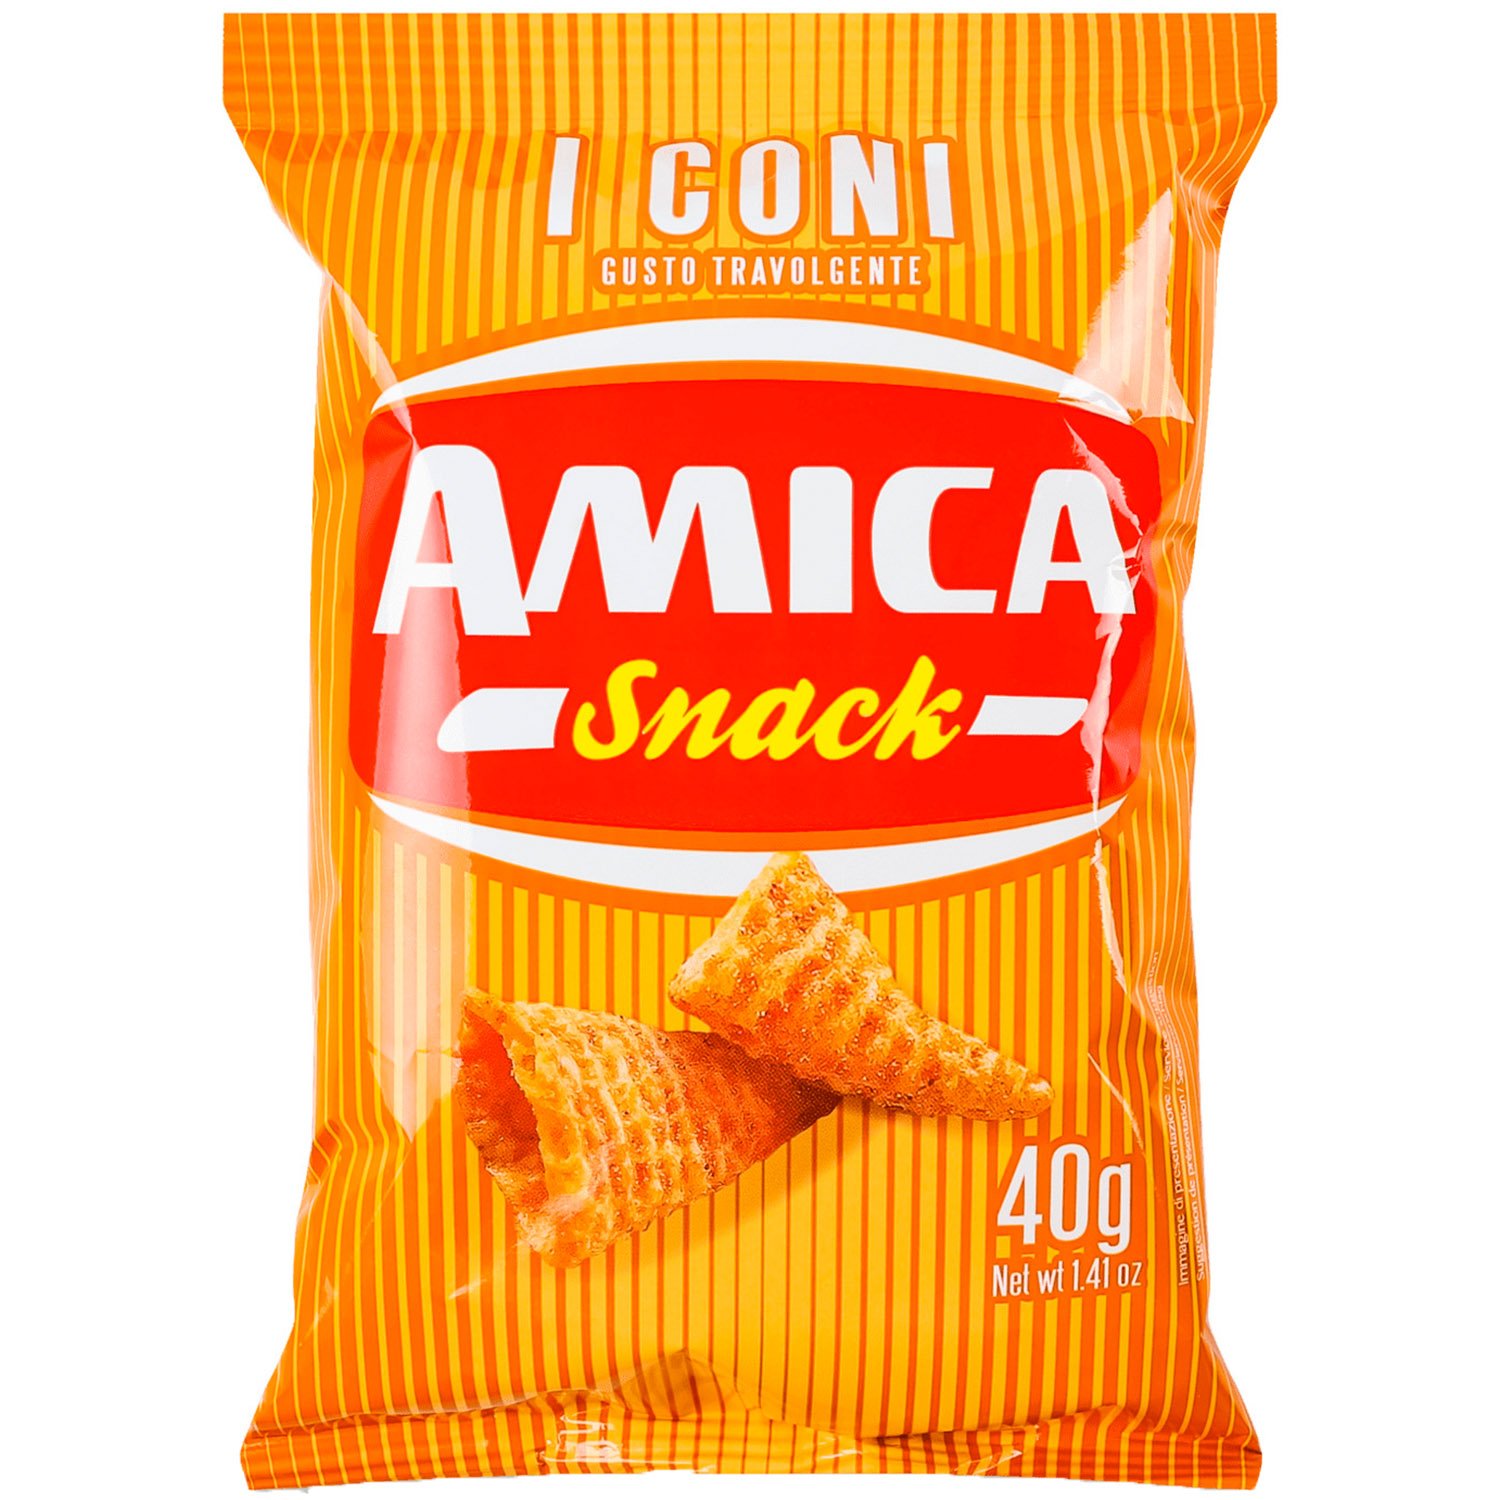 Снеки Amica Cone Virtual кукурузные со вкусом сыра 40 г (918448) - фото 1